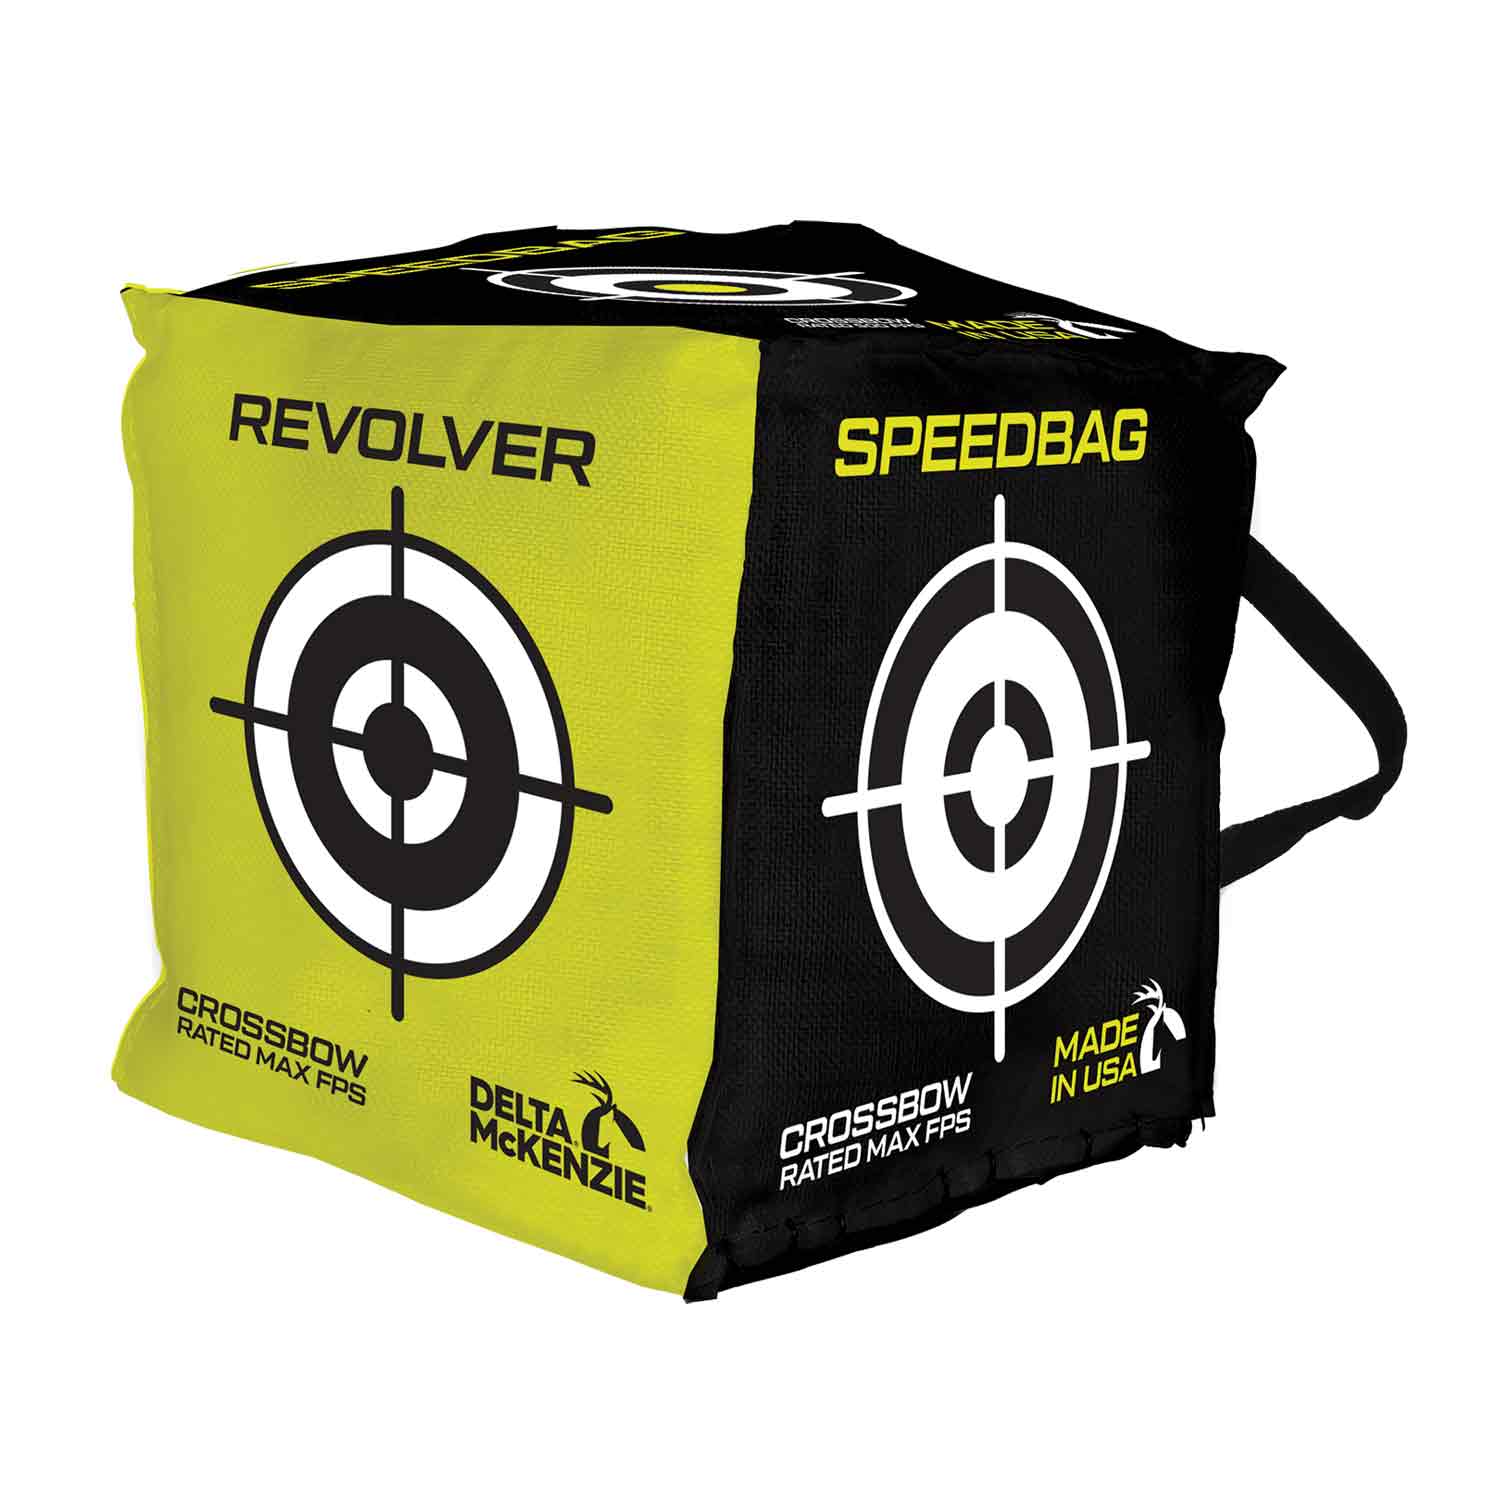 Delta McKenzie Speed Bag Revolver Bag Target